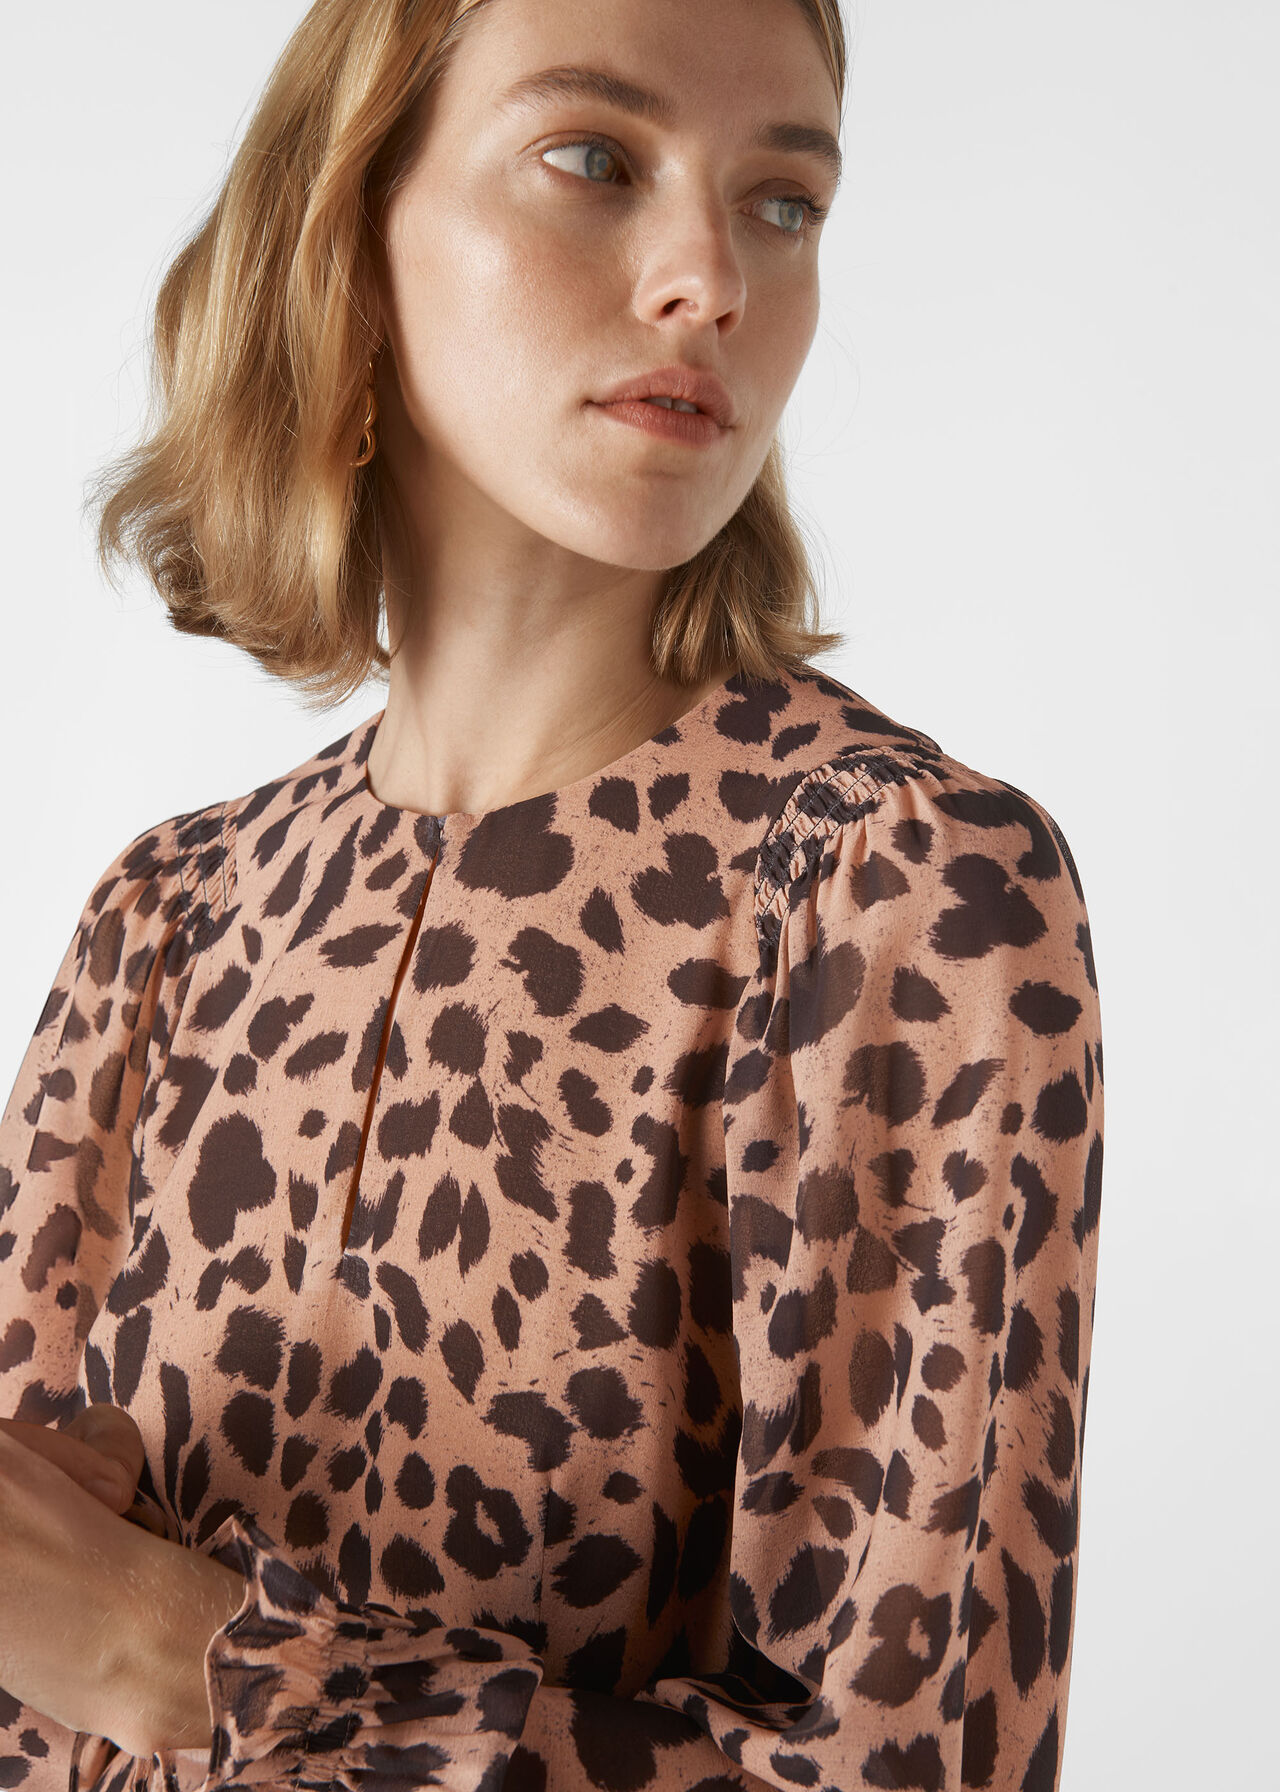 Brushed Cheetah Flippy Dress Leopard Print